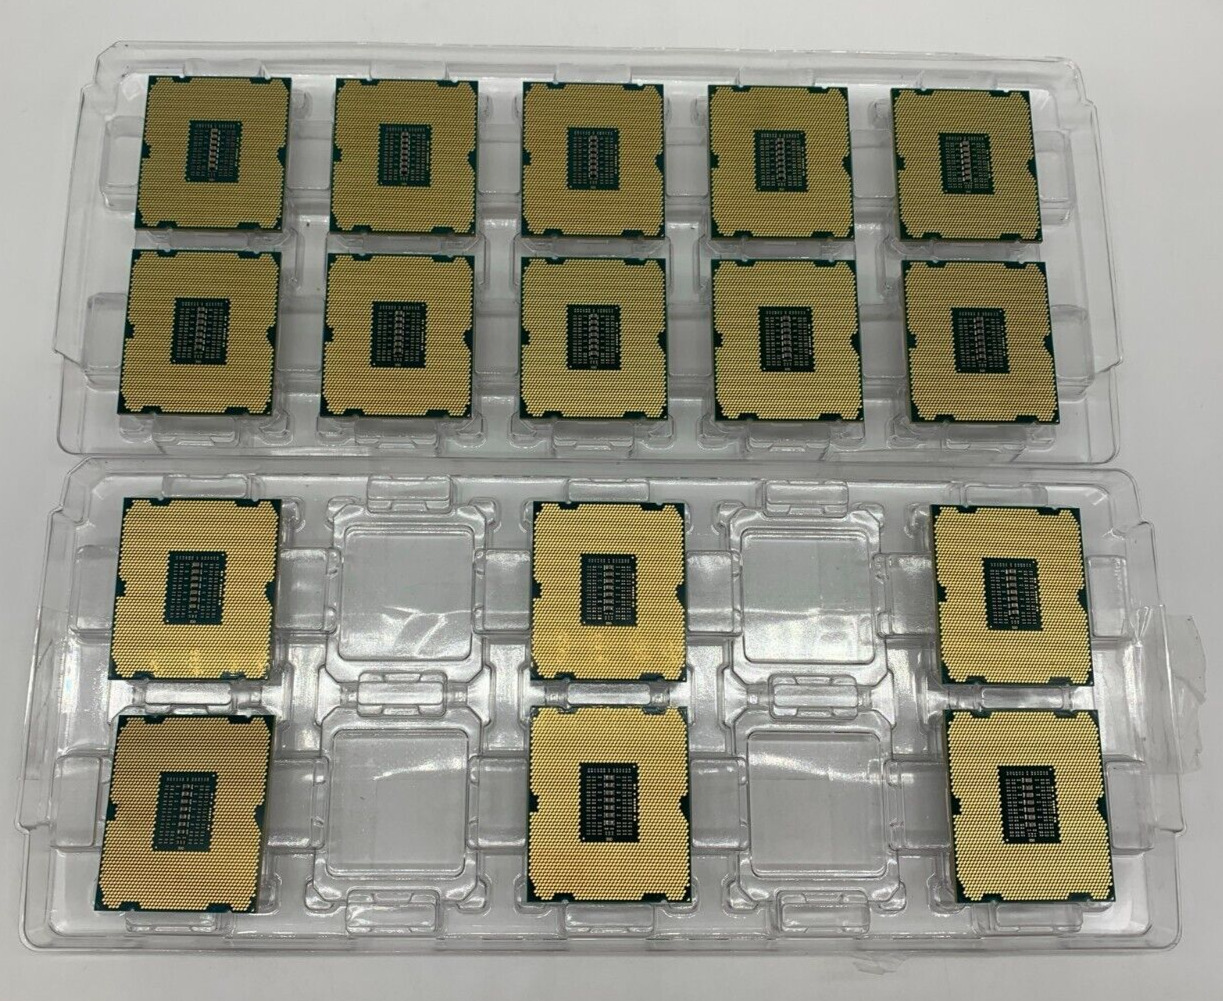 Lot of 16 Intel Xeon E5-2650 v2 2.6 GHz LGA 2011 8 Core CPU Processor SR1A8